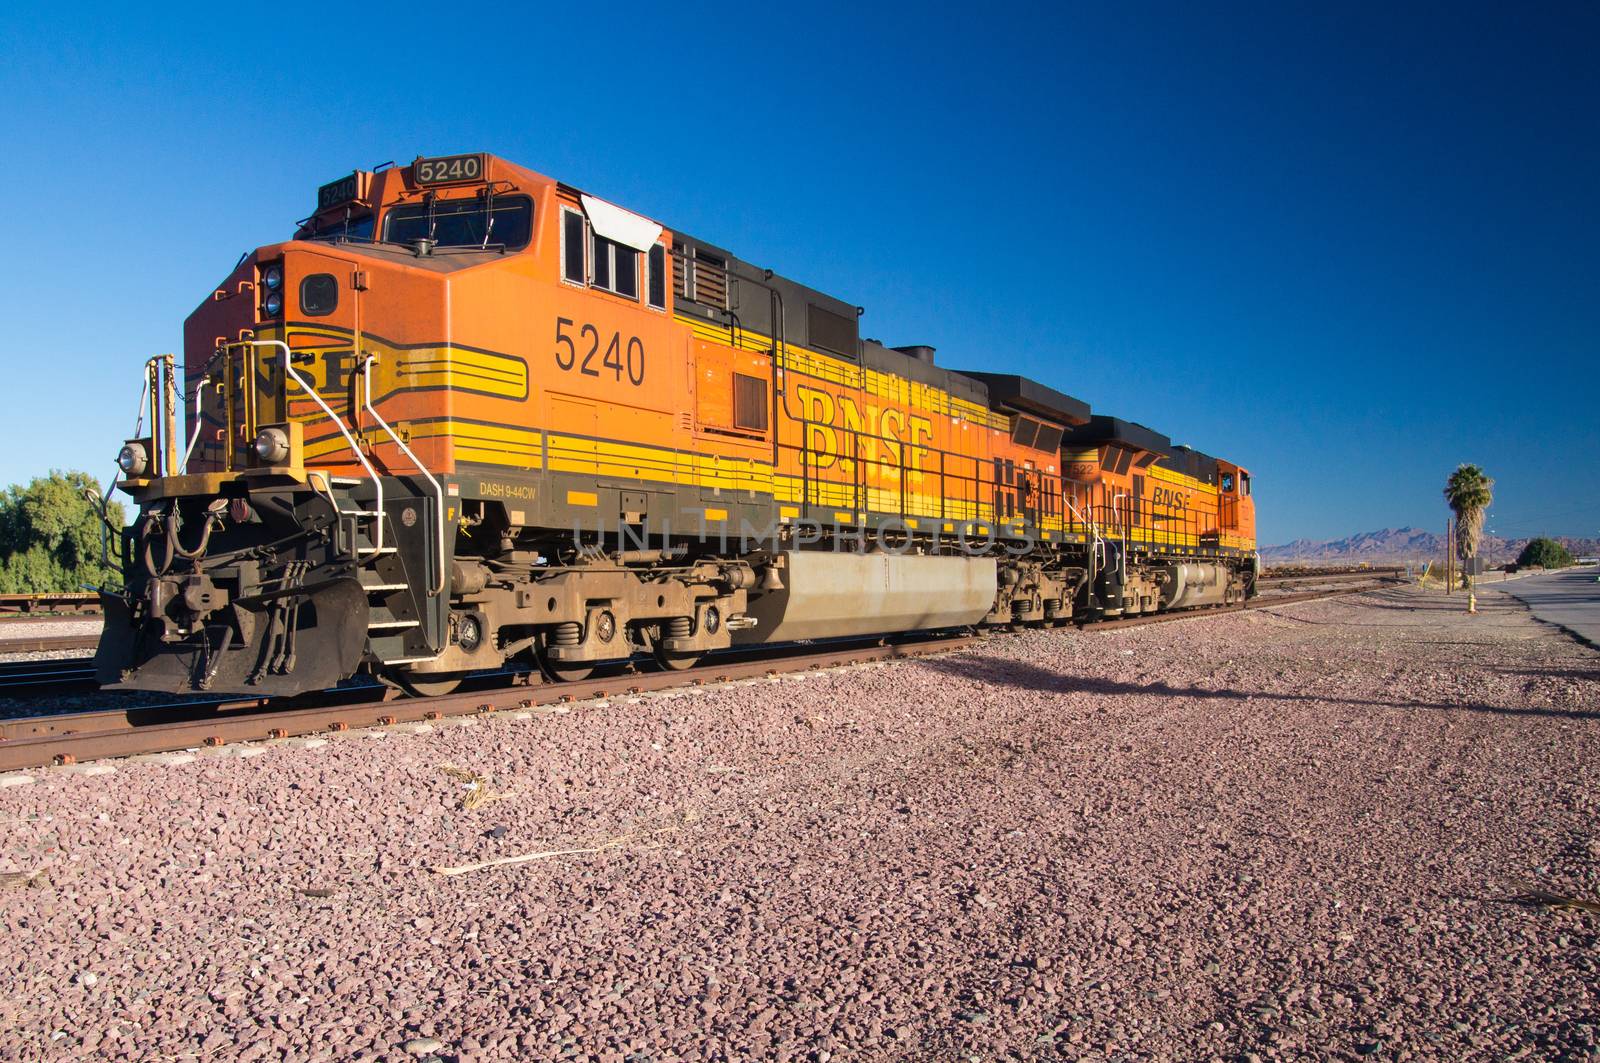 Distinctive orange and yellow Burlington Northern Santa Fe Locomotive freight train No. 5240 on the tracks at the town of Needles, California. Photo taken in February 2013.